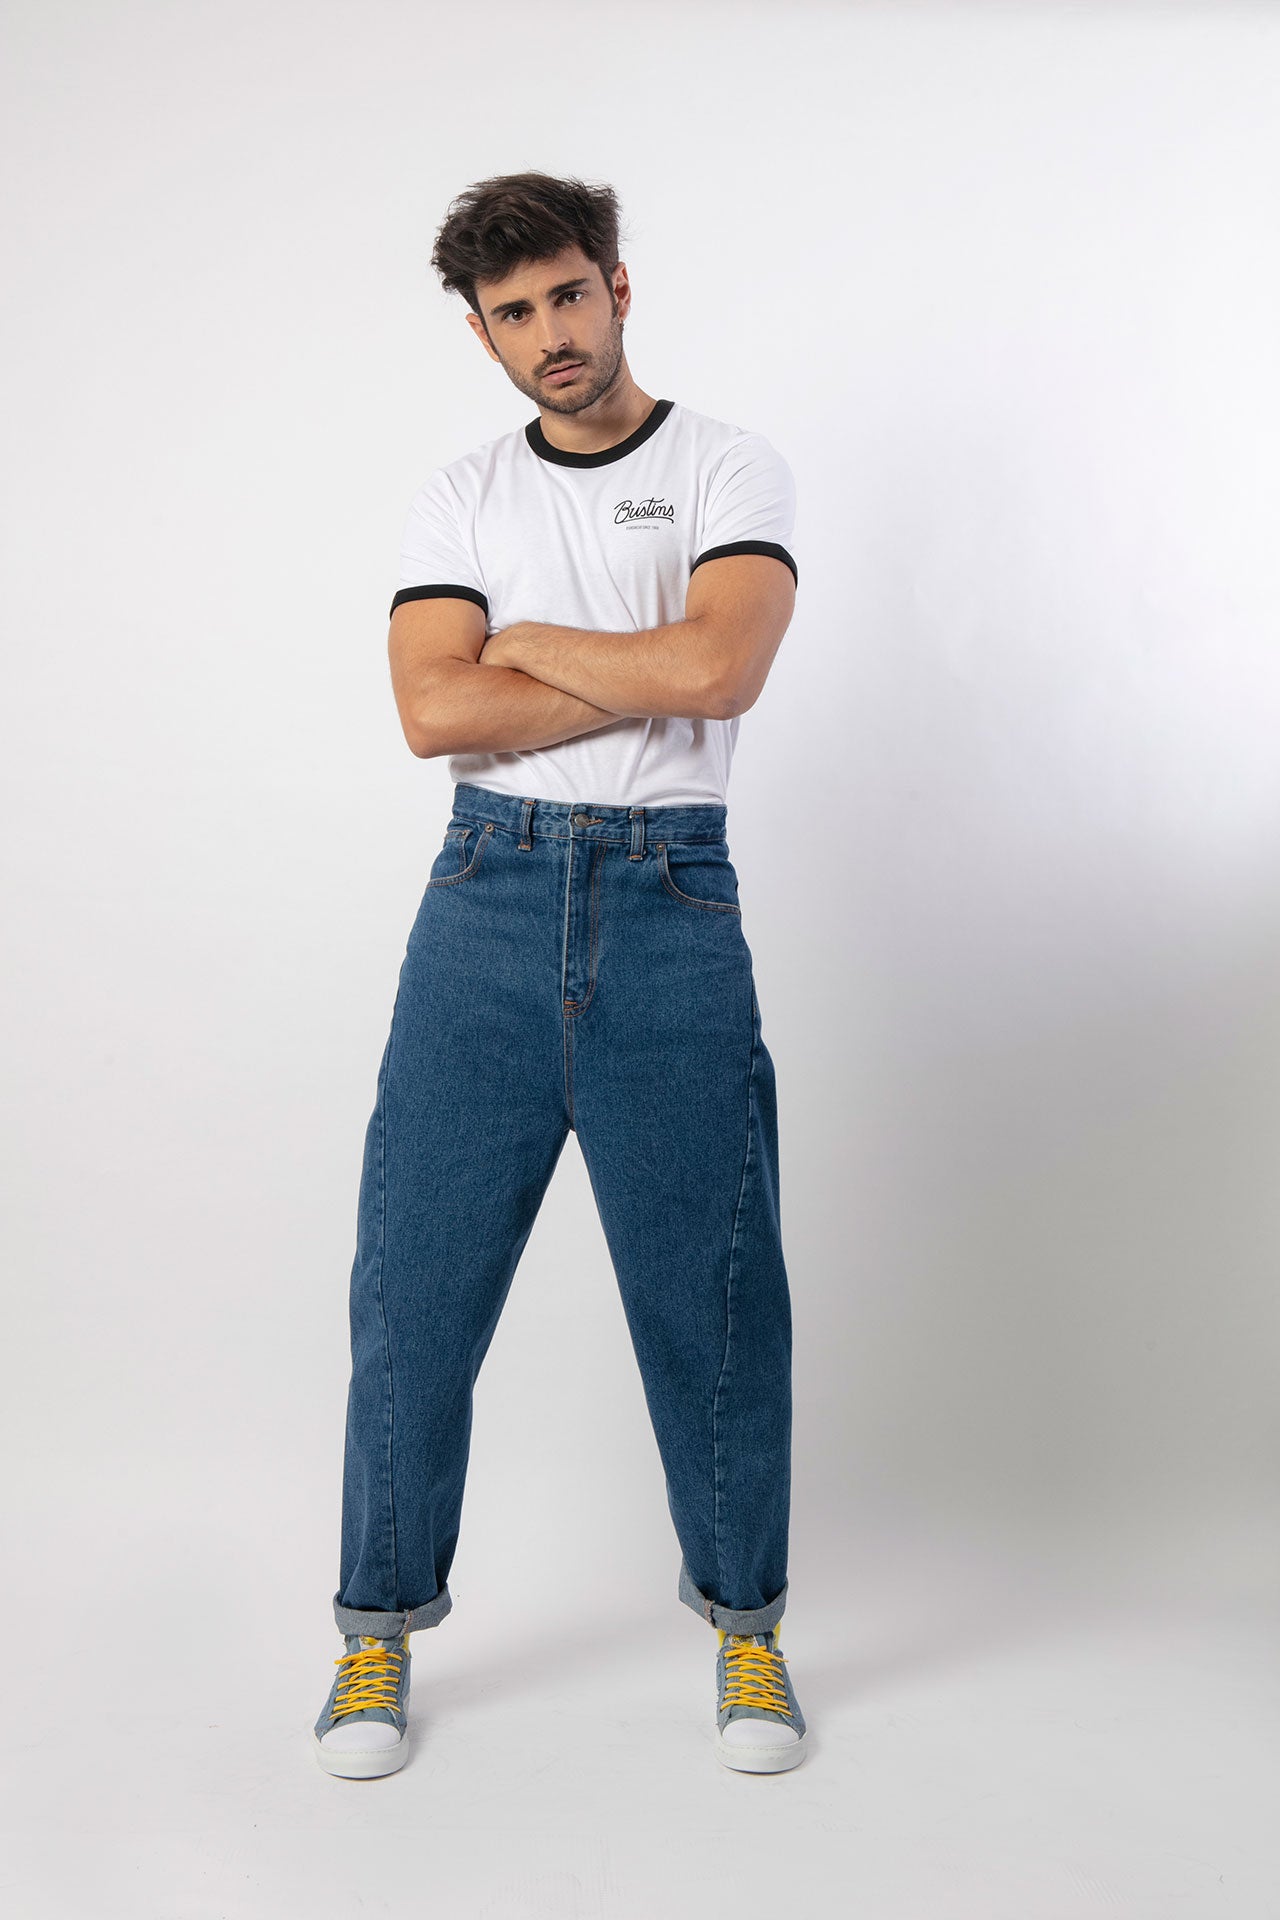 Vaqueros de Hombre  Pantalones Jeans Hombre – Bustins Jeans